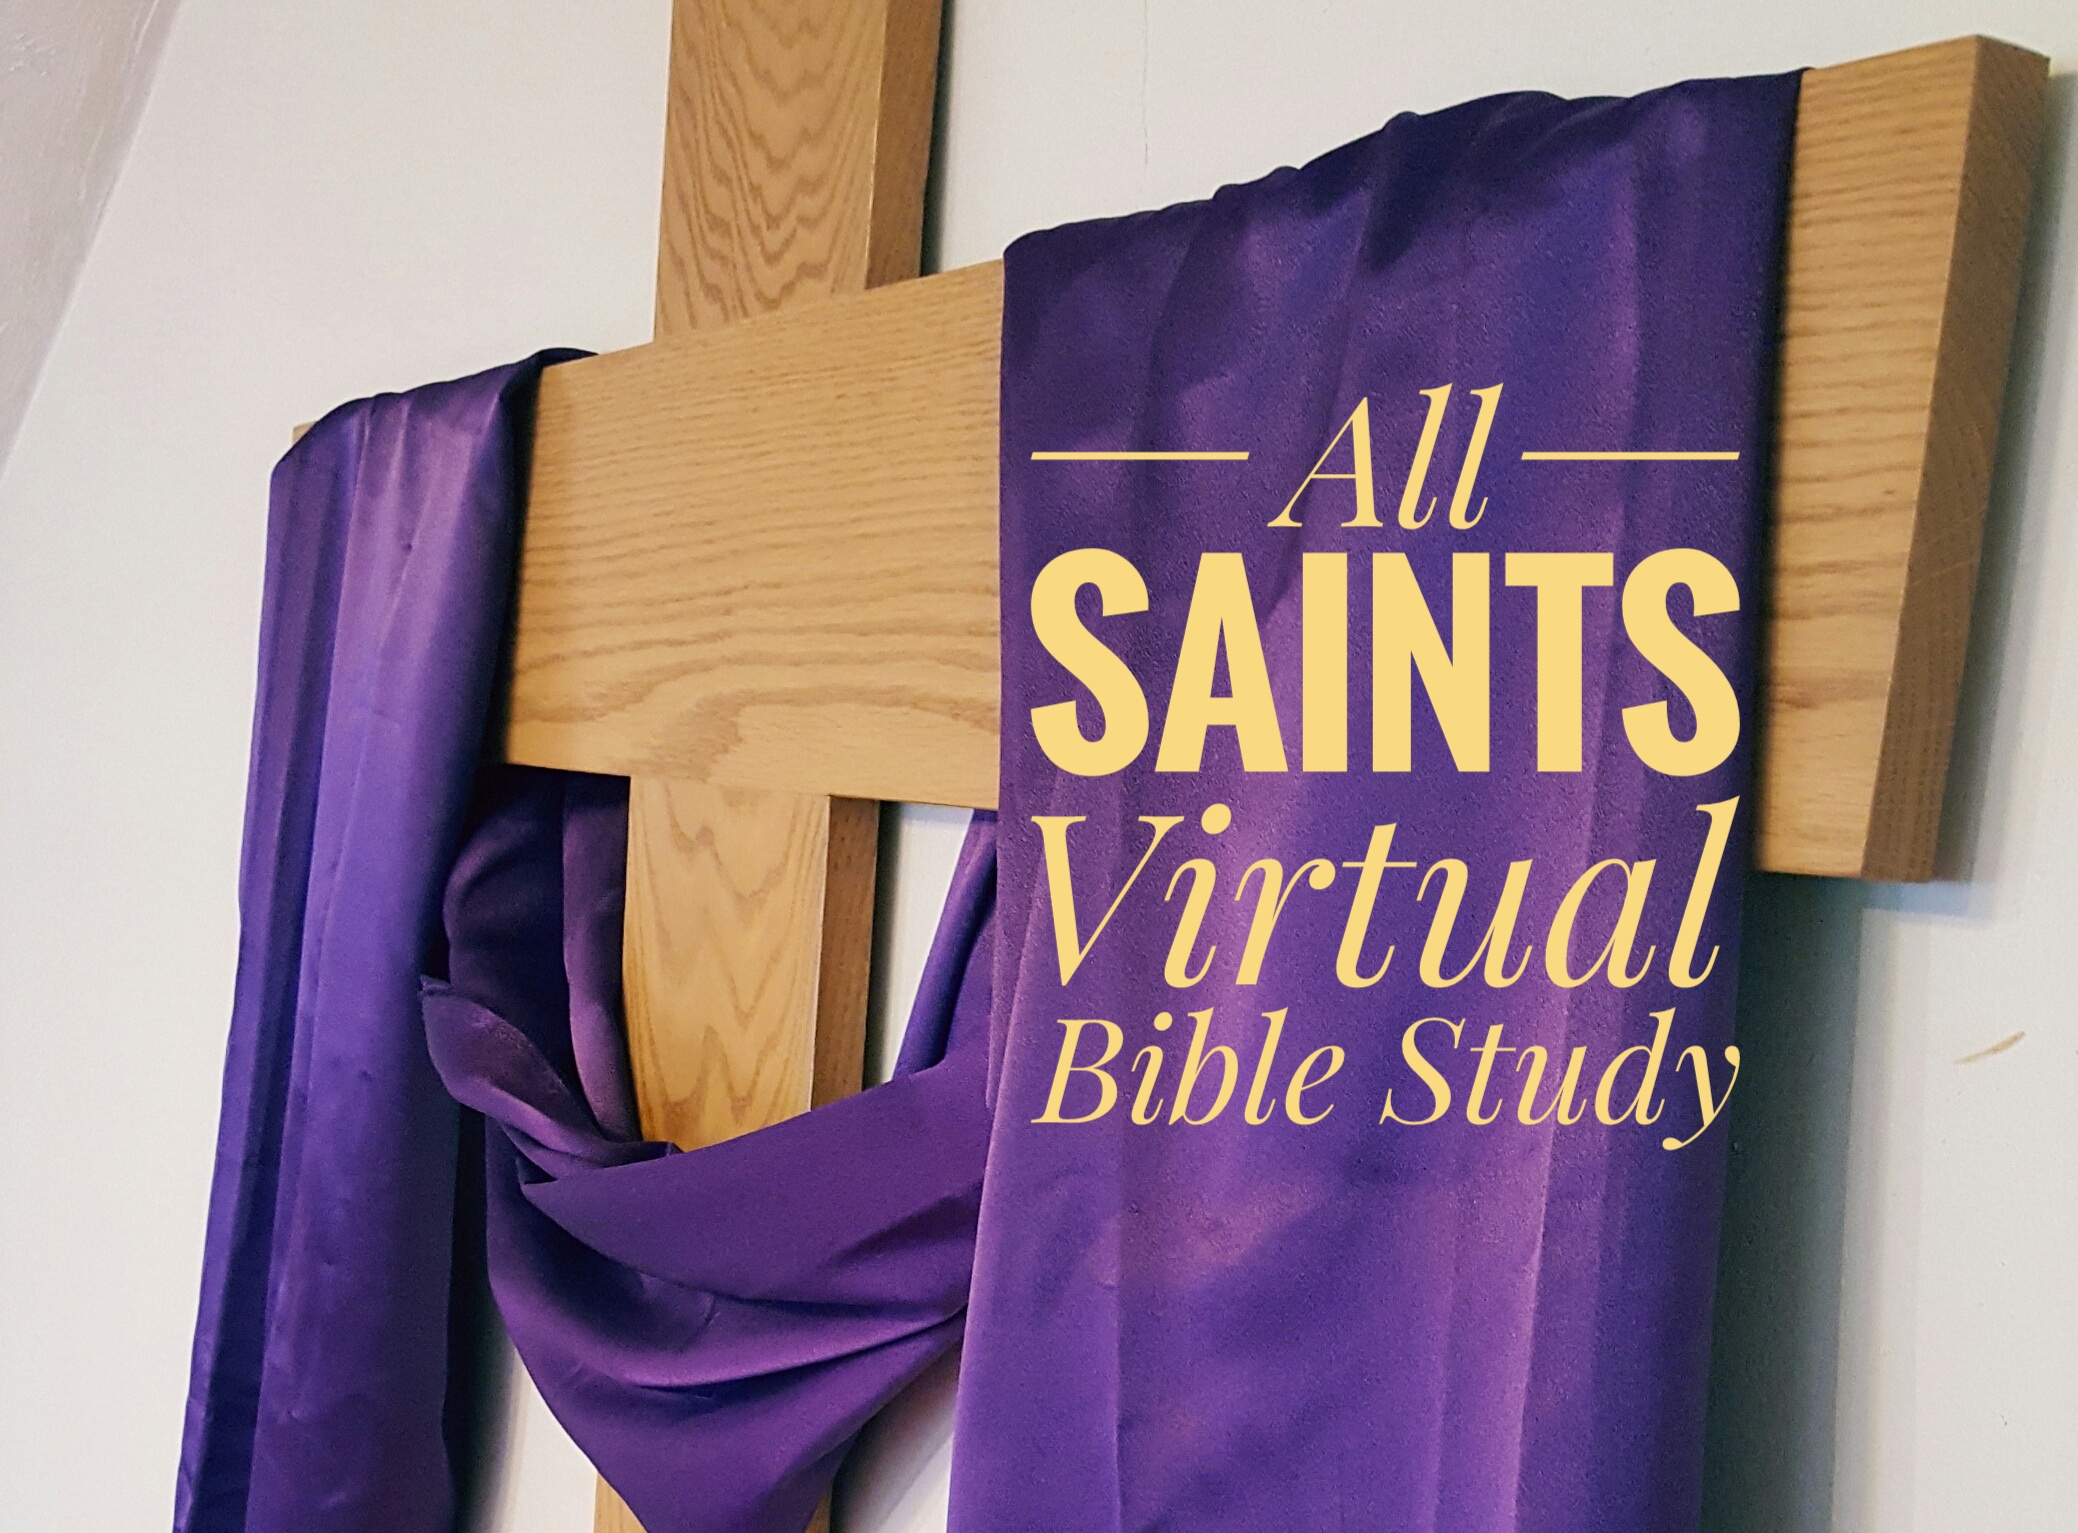 All Saints Virtual Bible Study - Acts 16:31